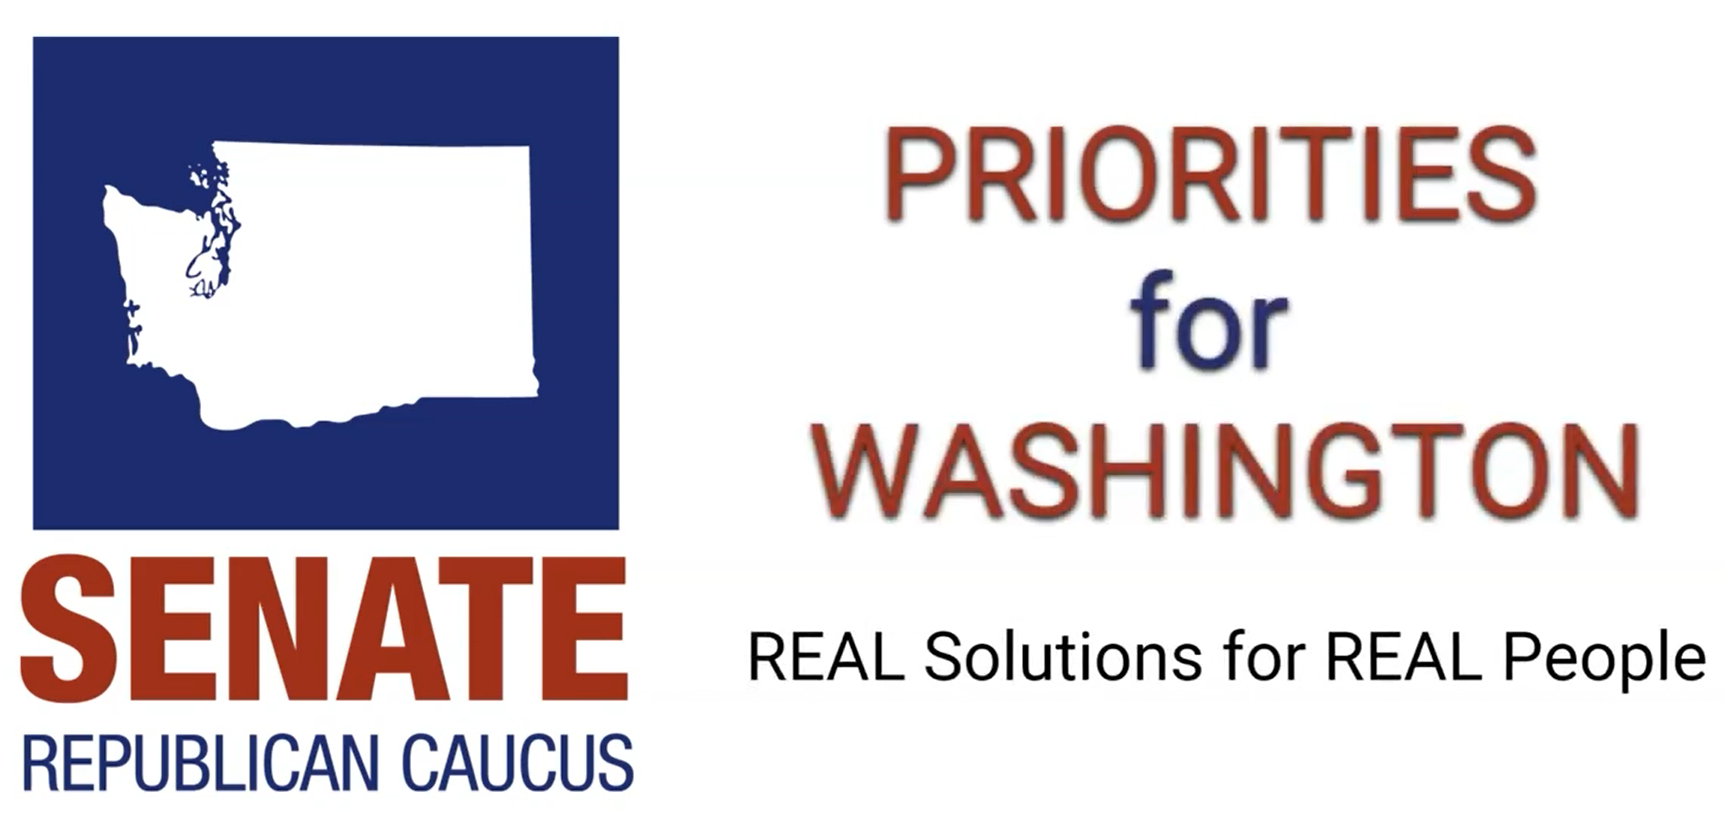 VIDEO: Washington State Senate Republican Priorities for Washington